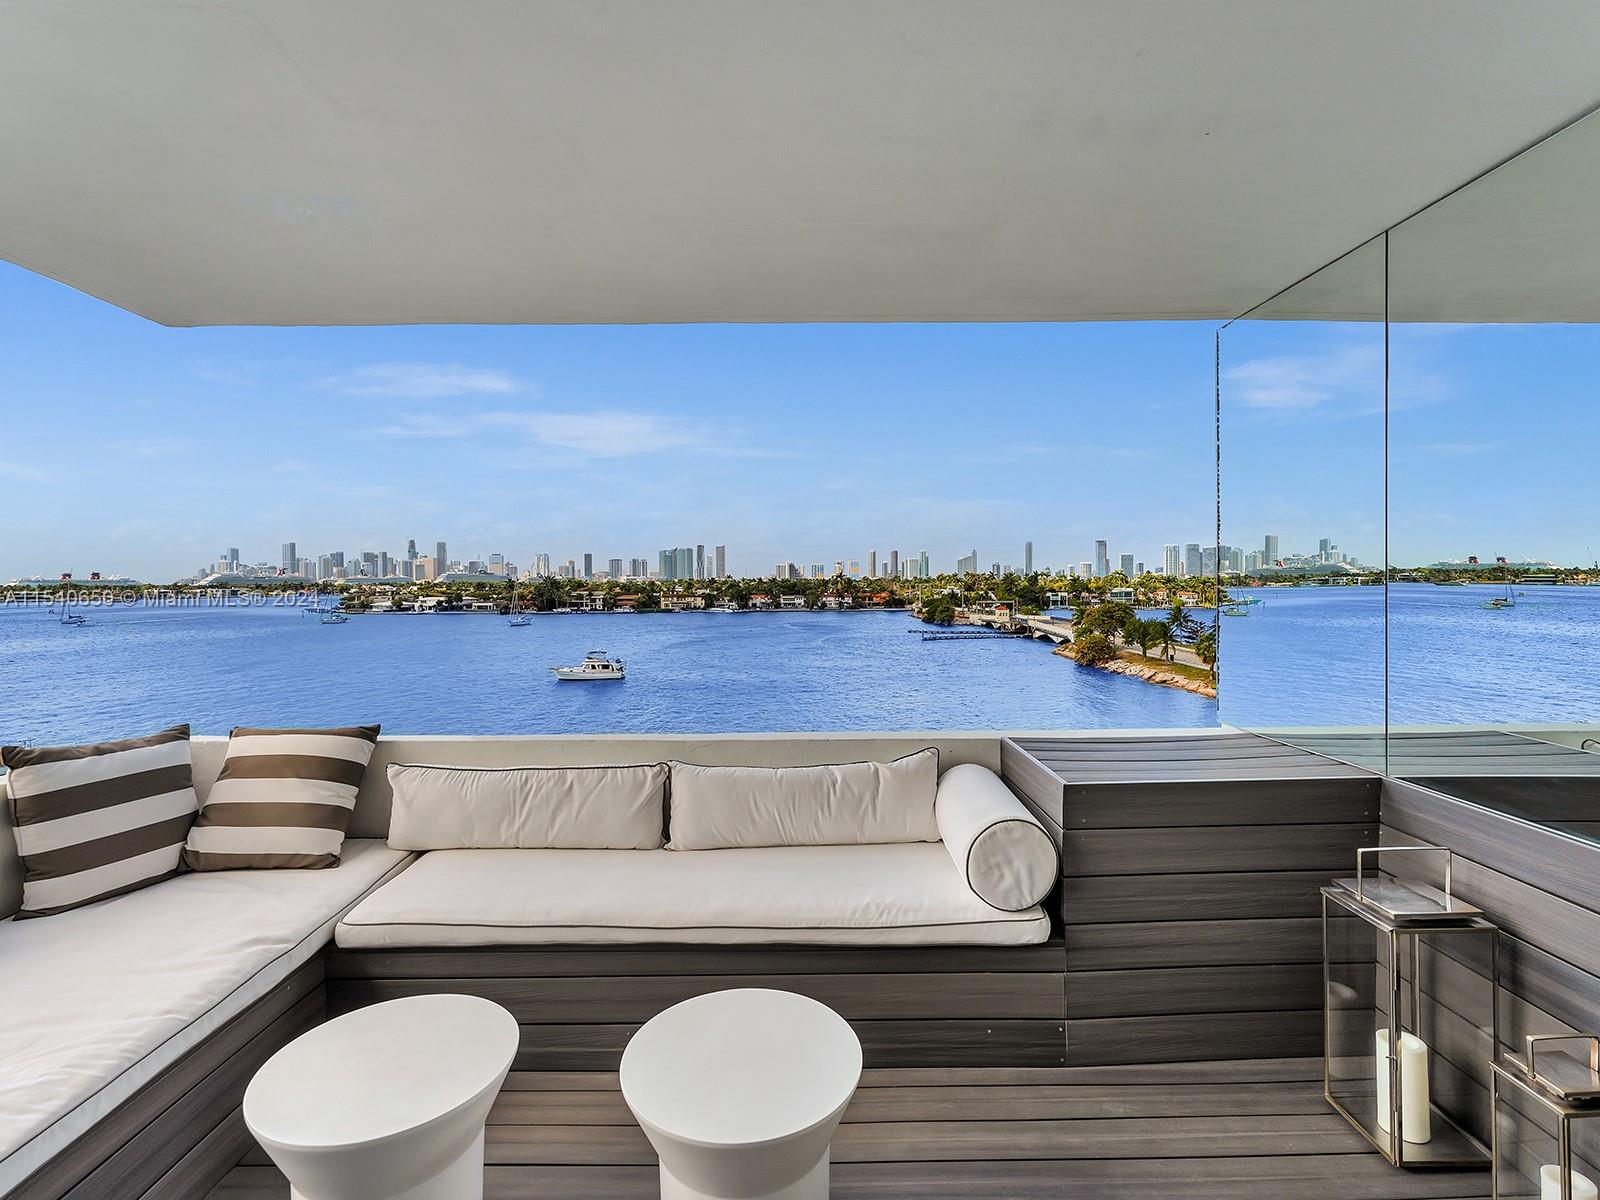 Rental Property at 3 Island Ave 06I, Miami Beach, Miami-Dade County, Florida - Bedrooms: 2 
Bathrooms: 2  - $9,800 MO.